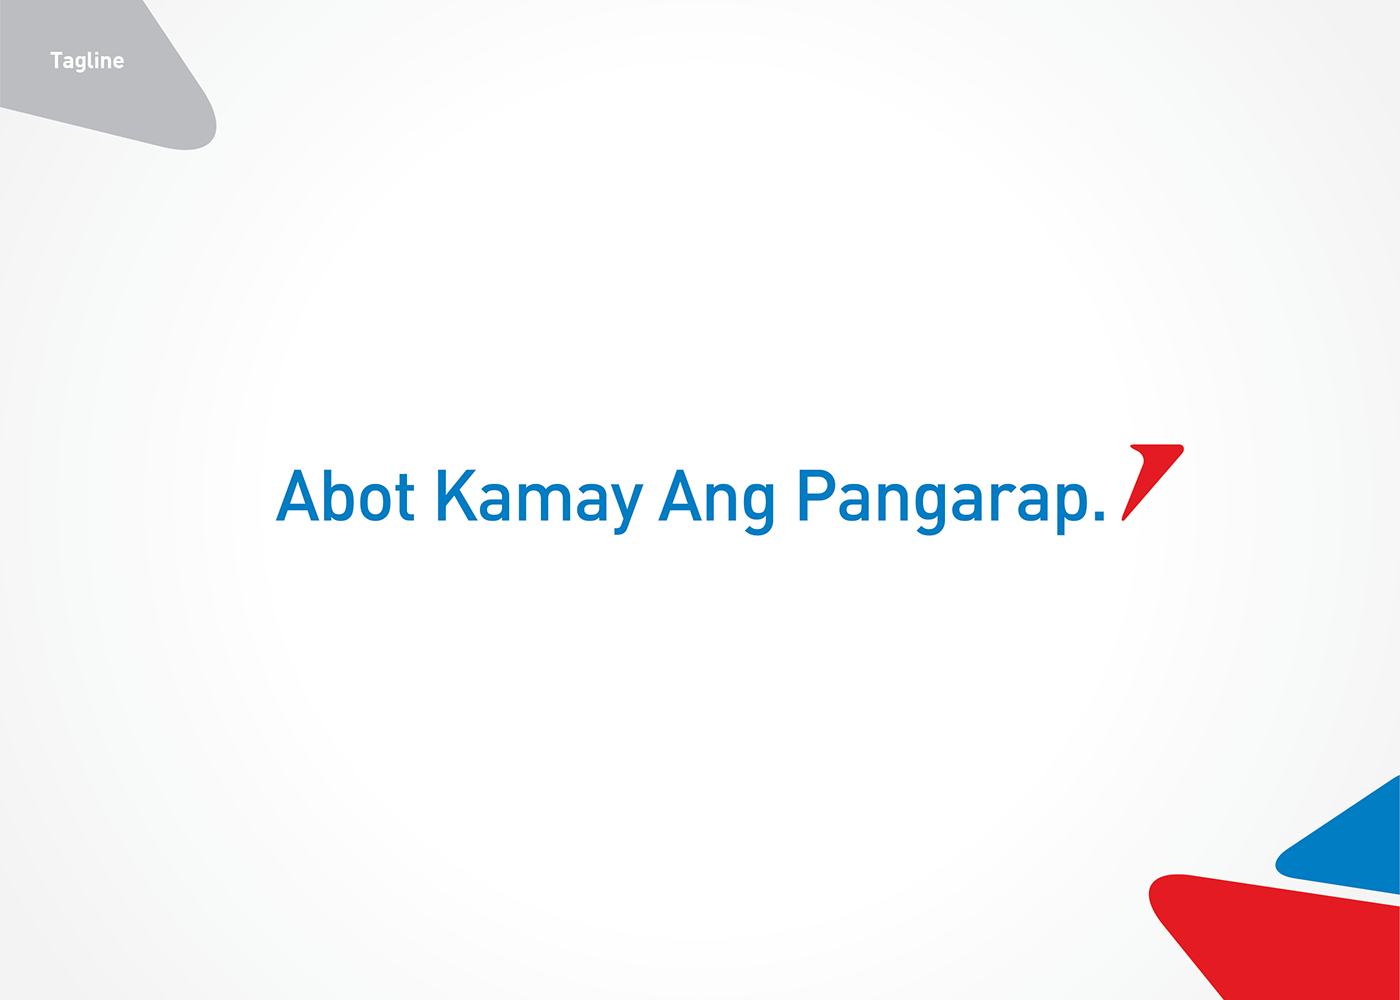 villarica pawnshop money teammanila philippines Manila served logo TRANSFER Logotype clean red arrow